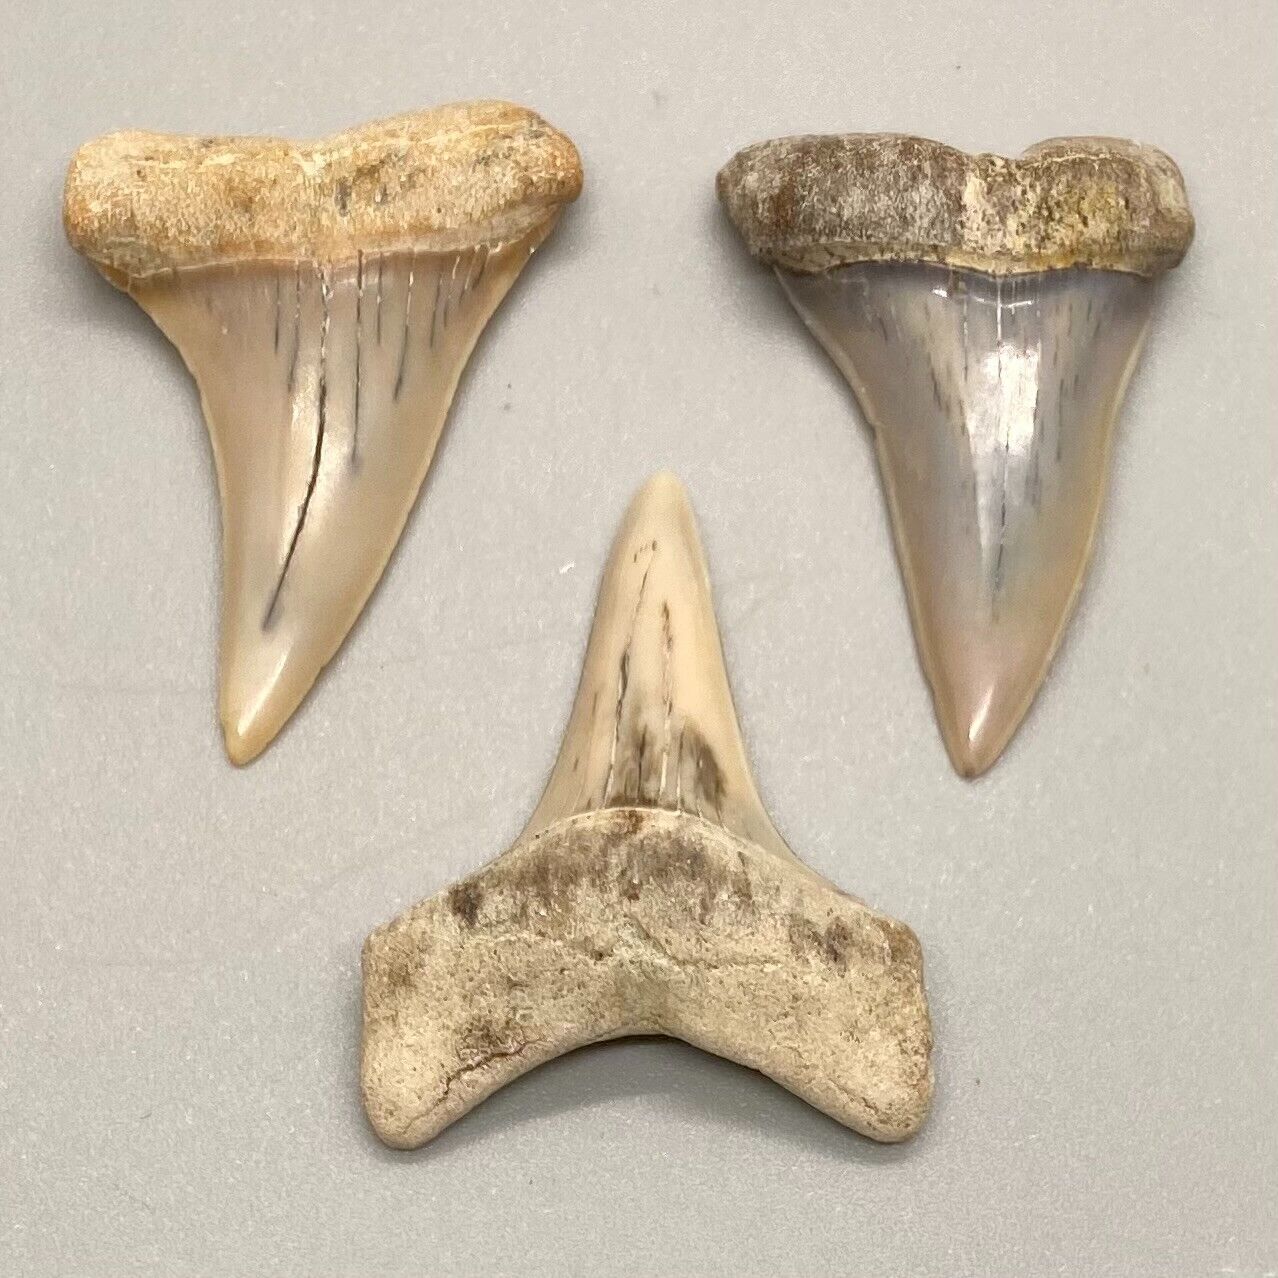 Group of 3 Gorgeous Fossil Extinct Mako Shark Teeth - Bakersfield, CA